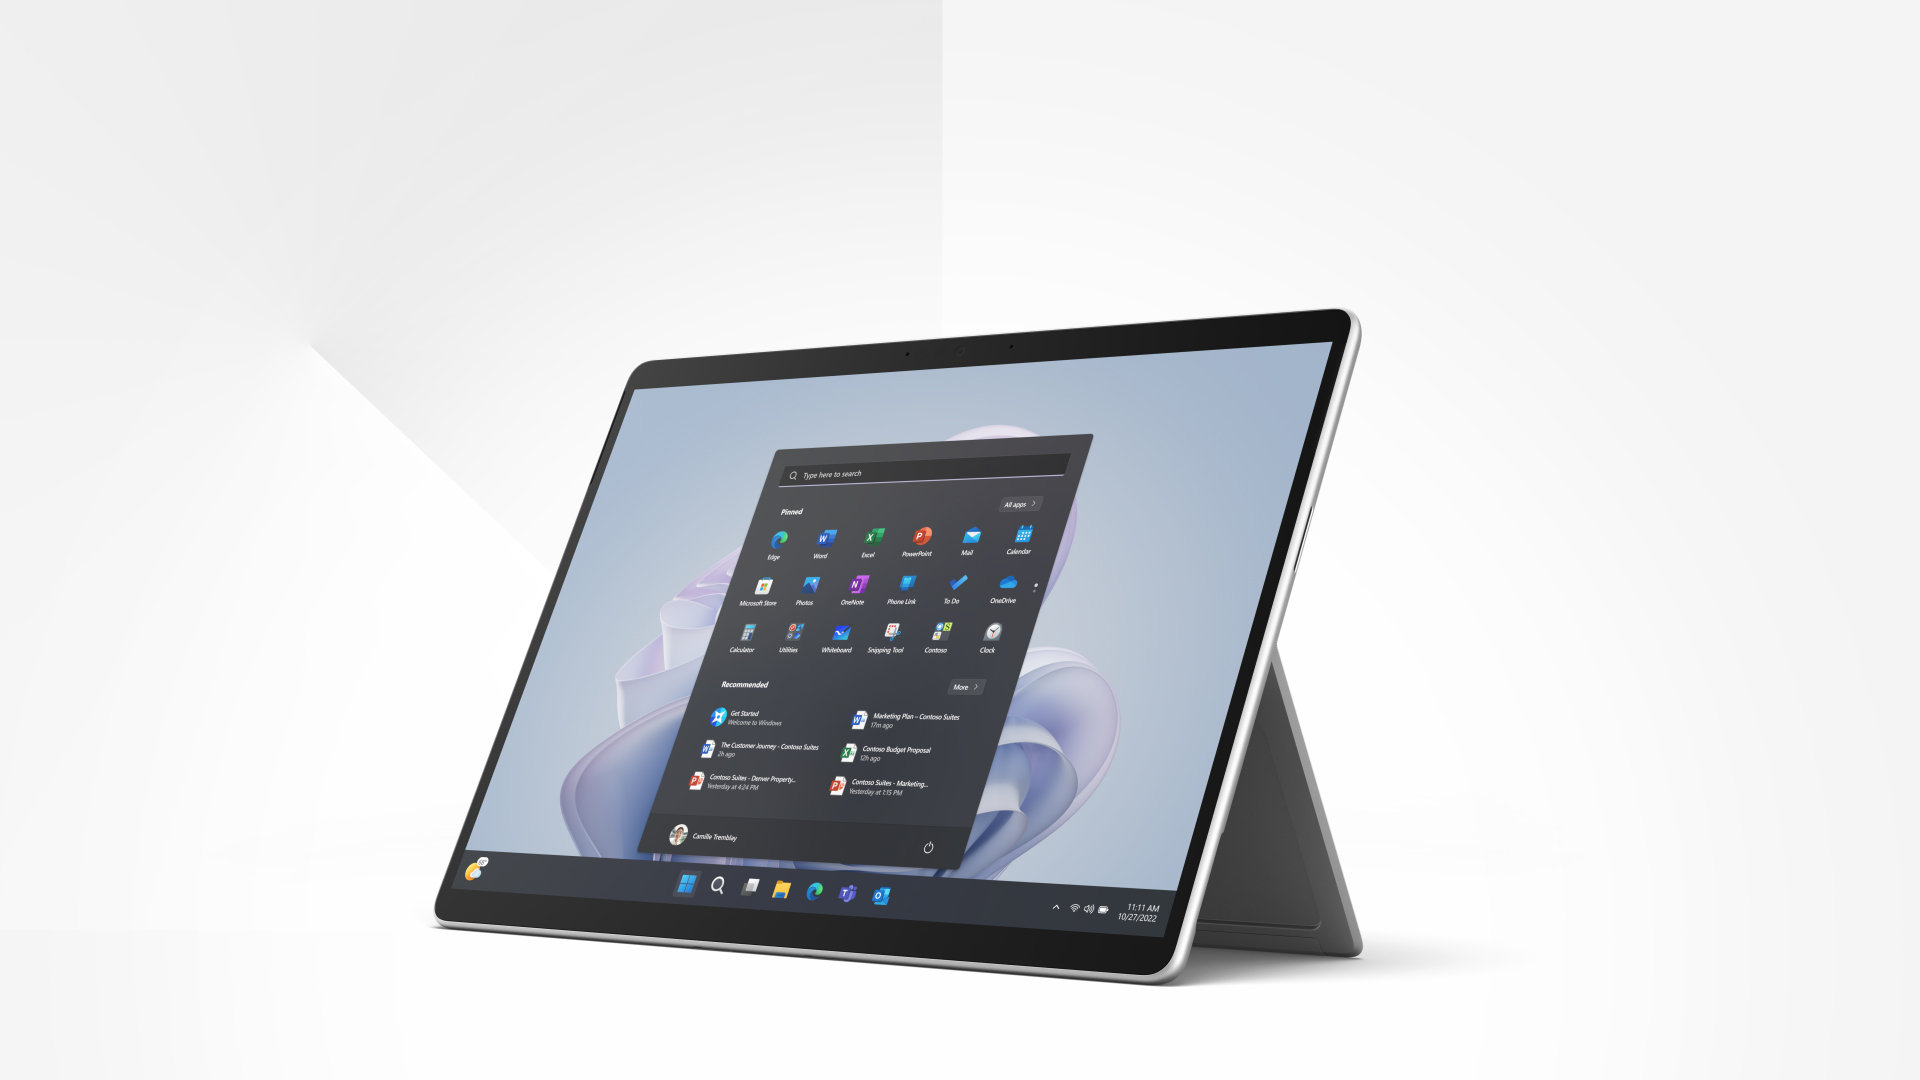 Microsoft Surface Pro 4 12.3 Windows 10 Pro Tablet PC